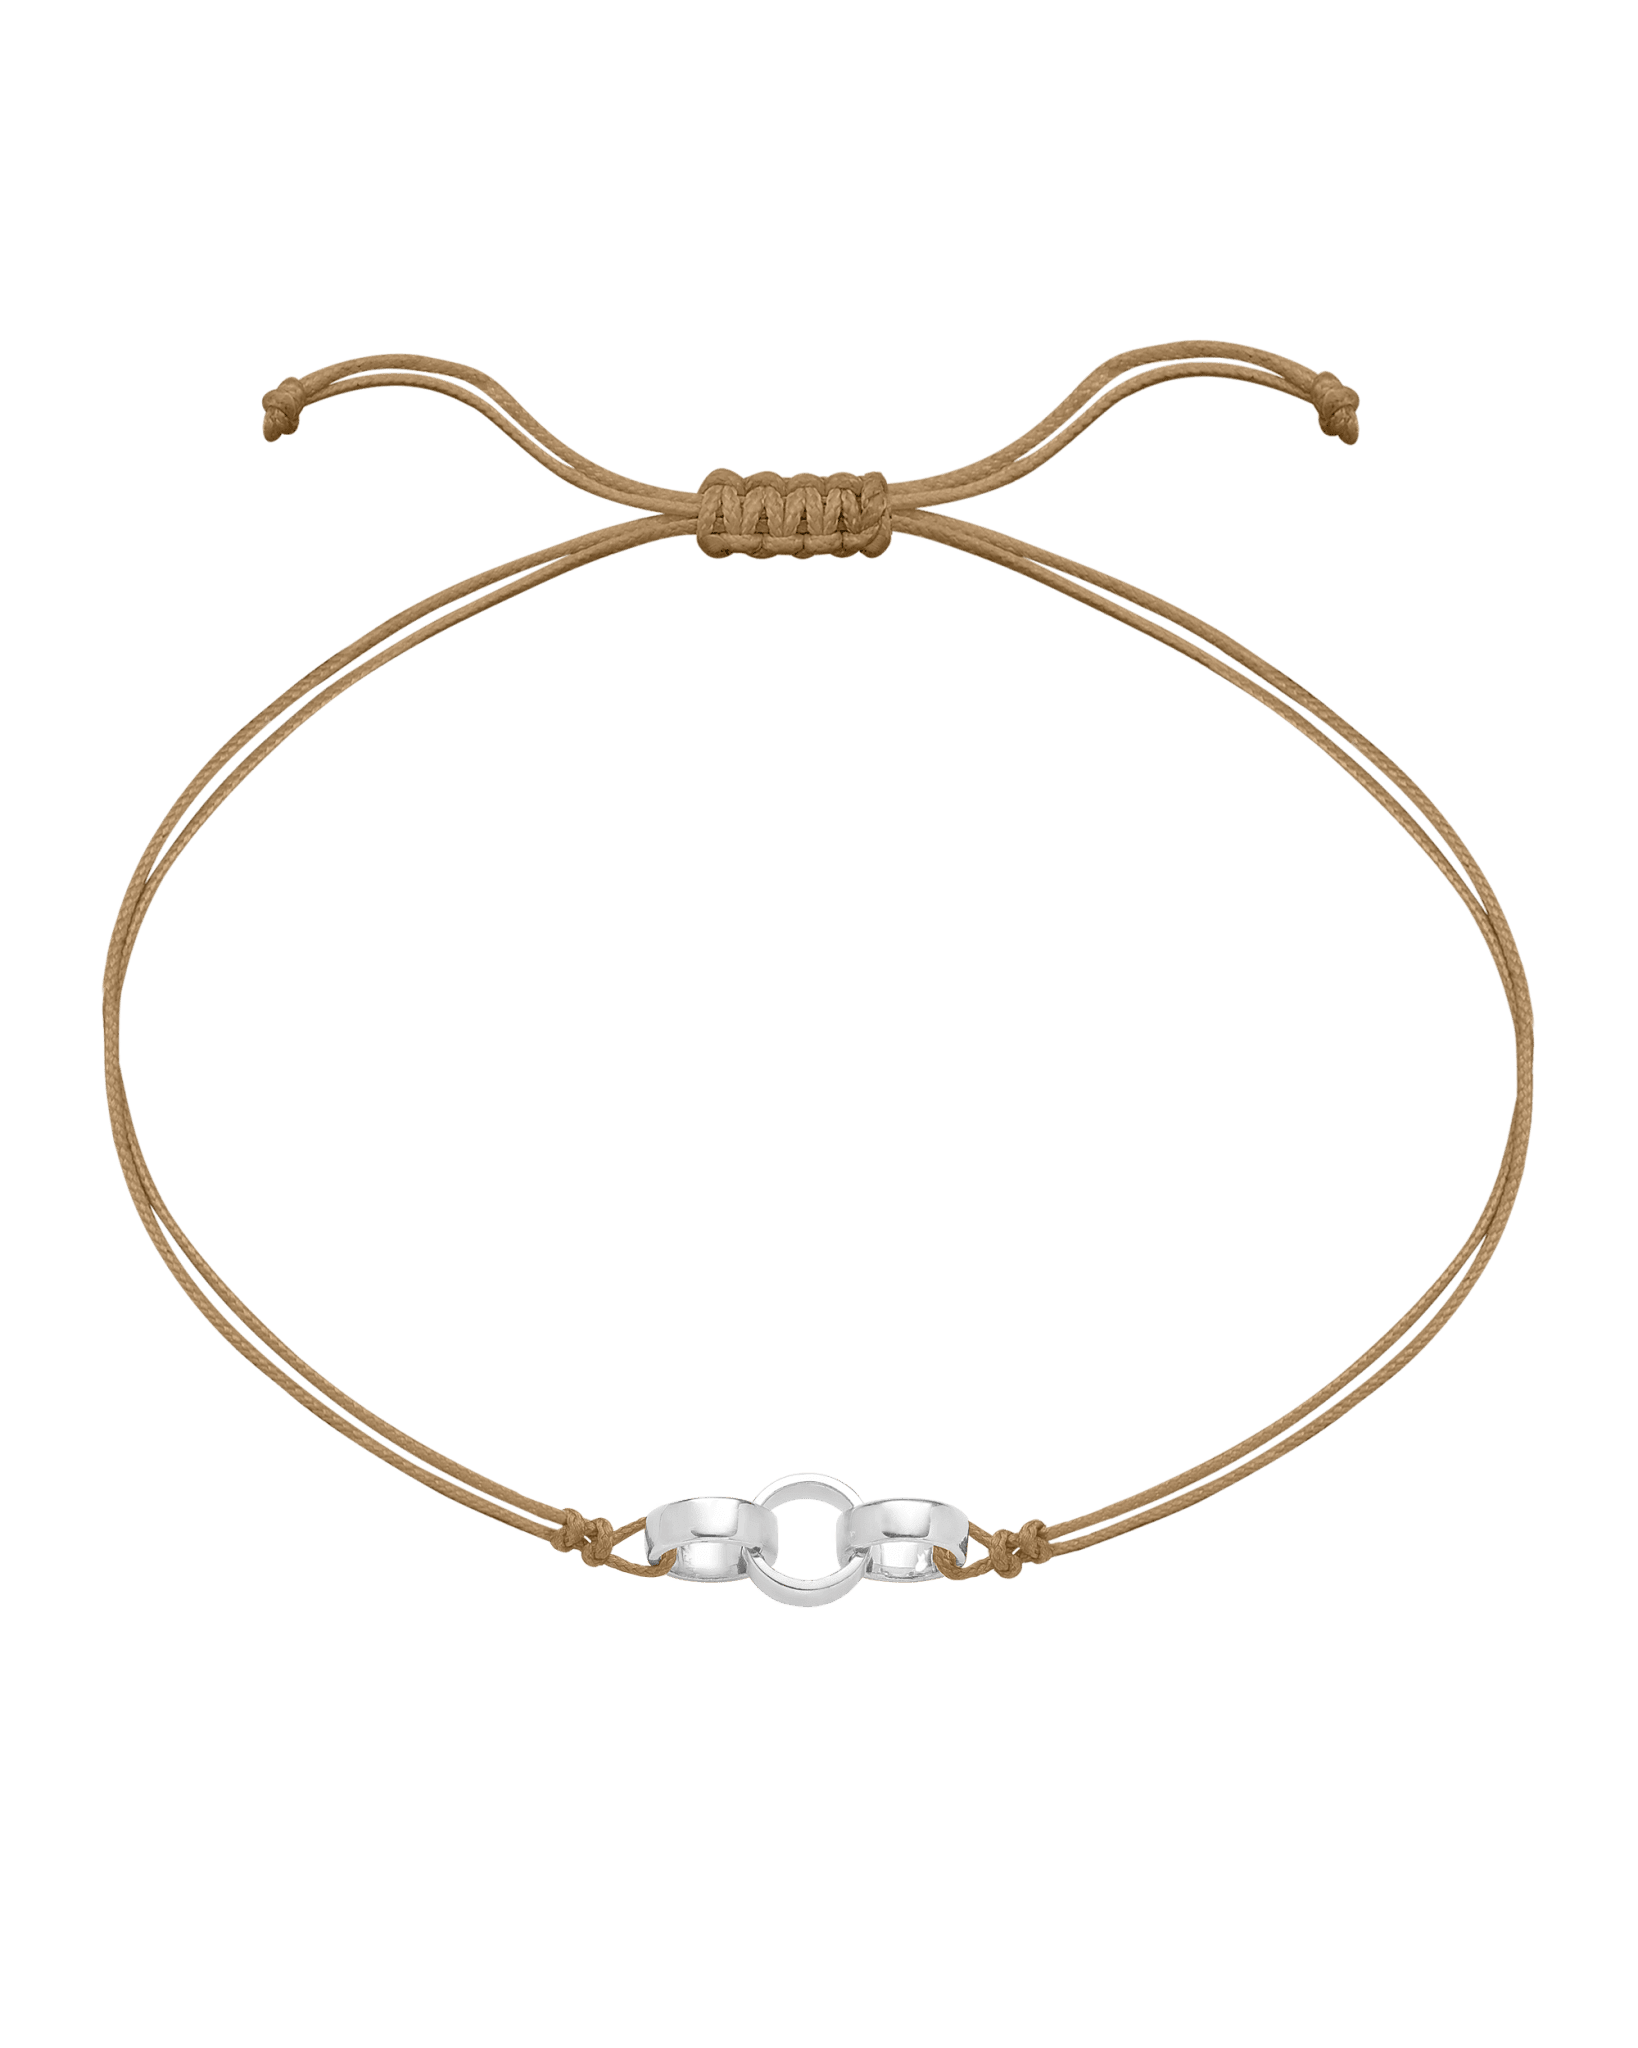 Engravable Links of Love - 14K White Gold Bracelets magal-dev 3 Camel 